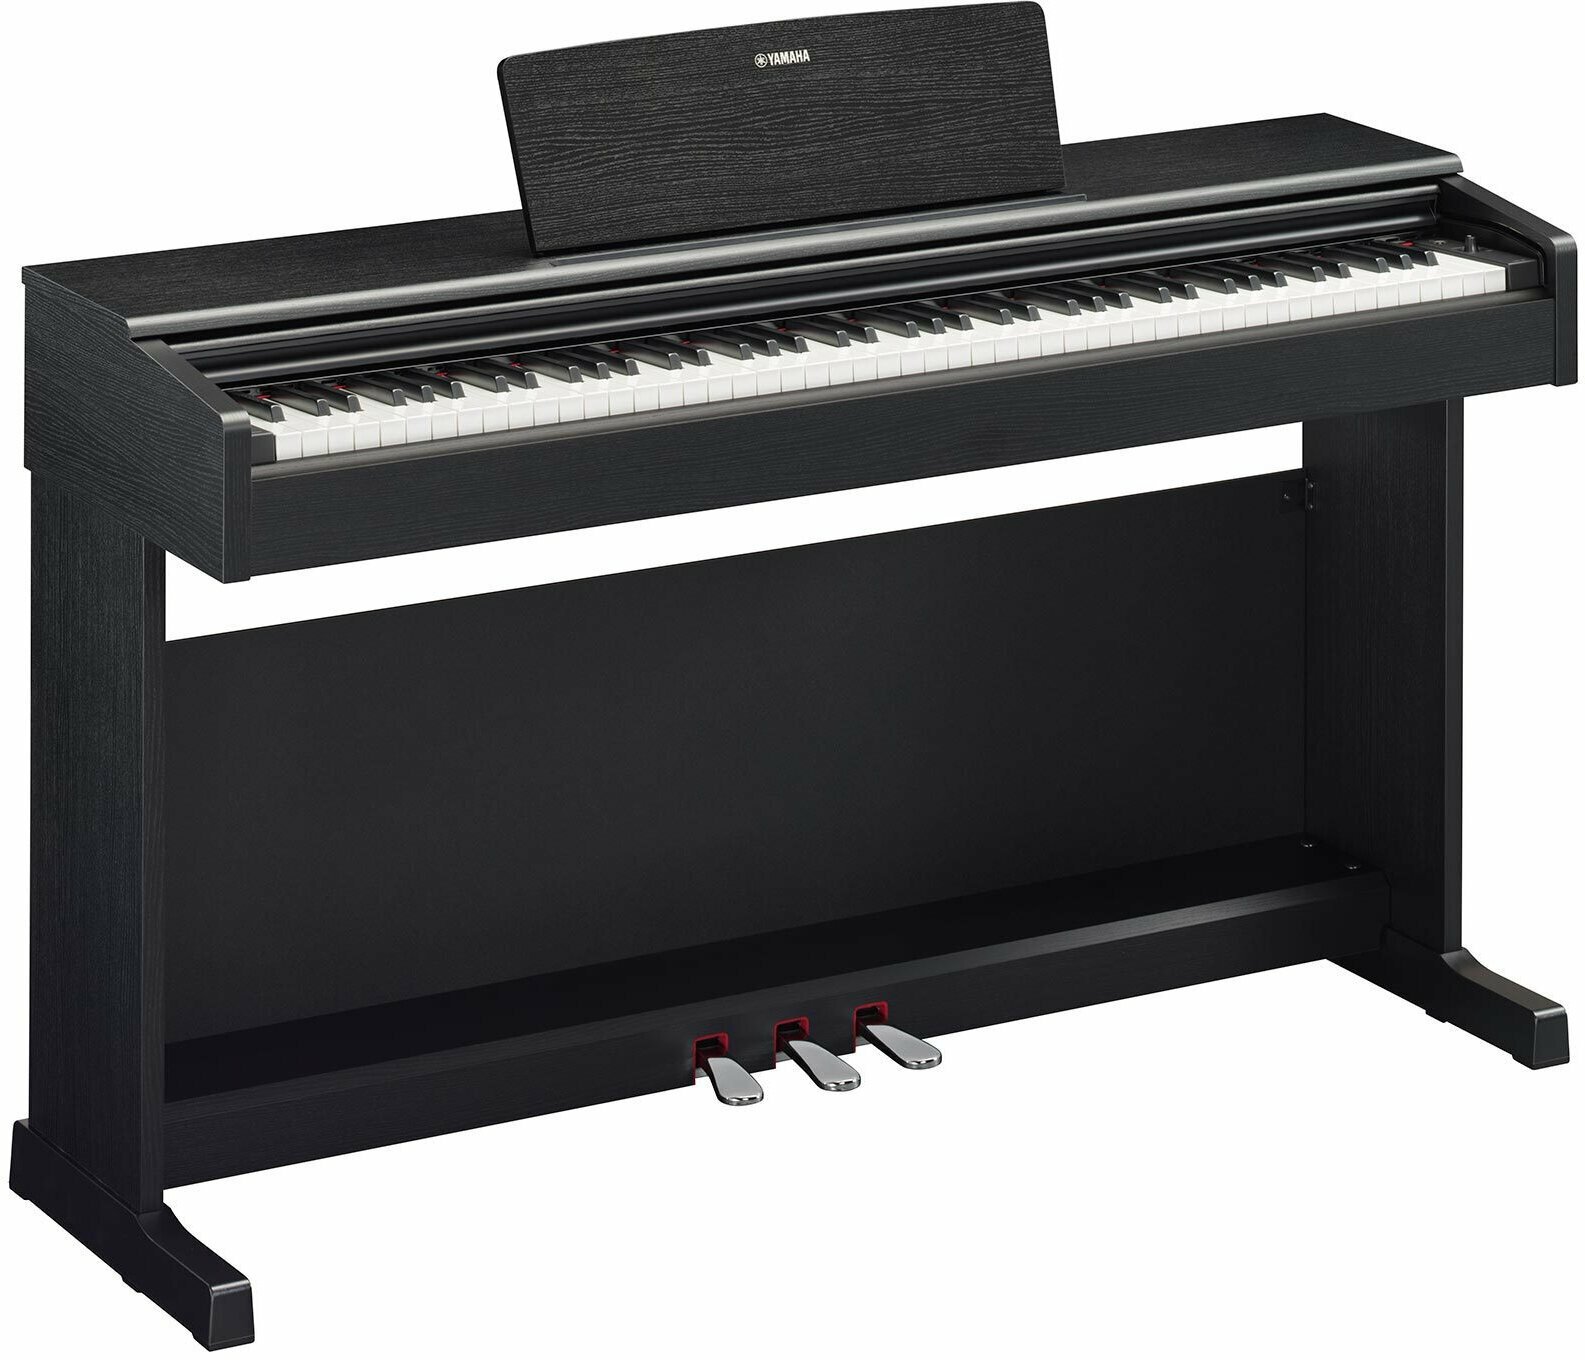 Piano digital Yamaha YDP-145 Black Piano digital